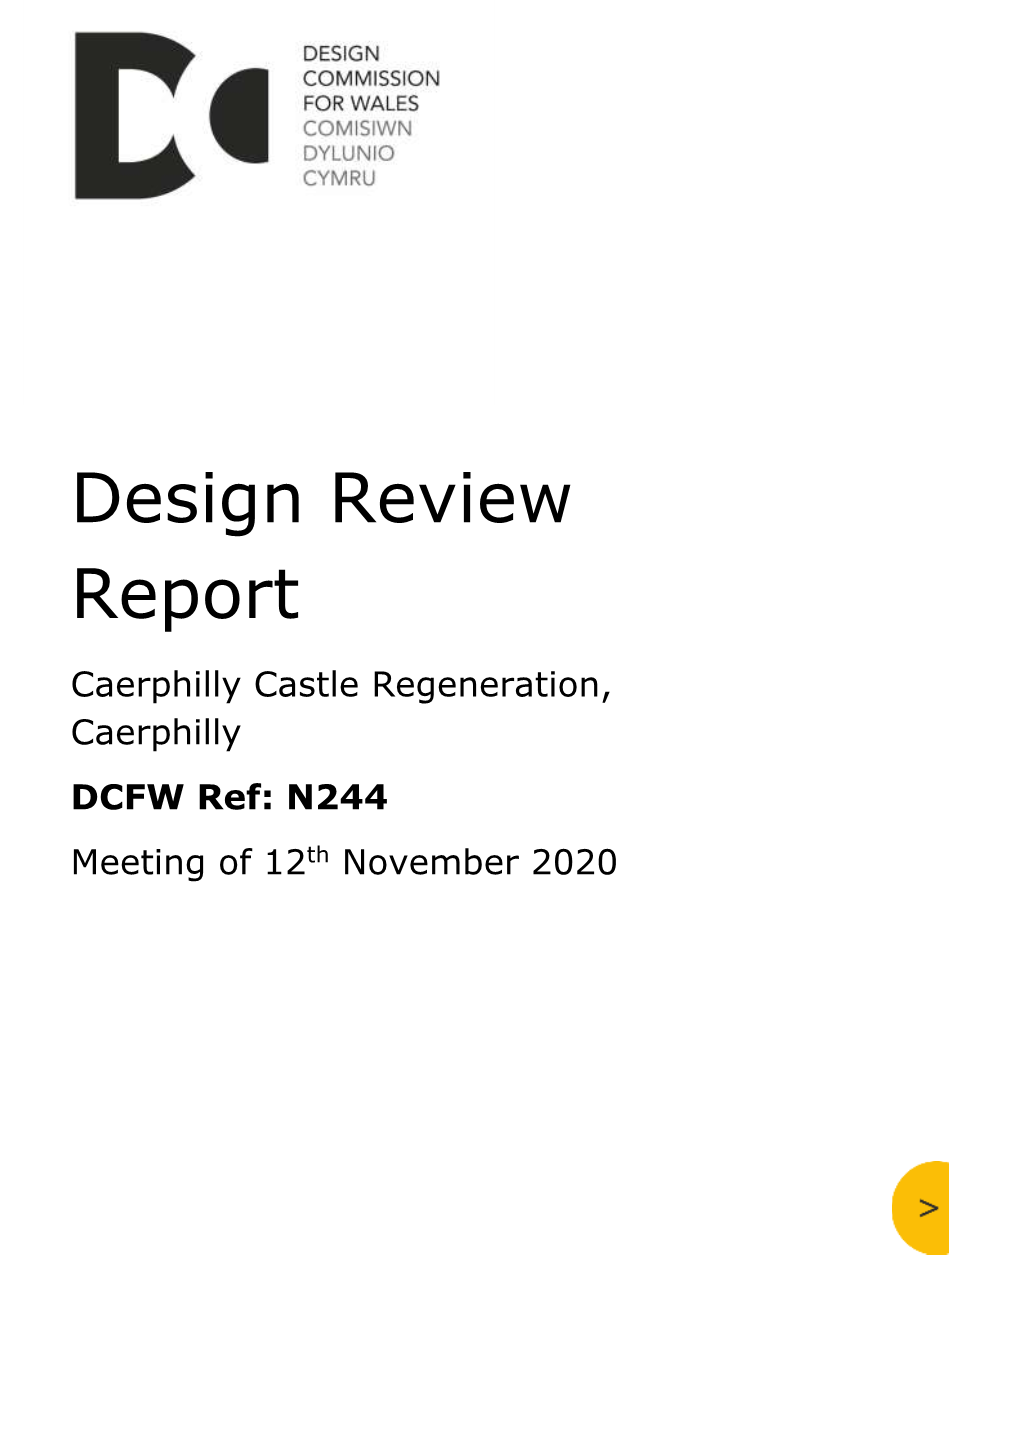 Design Review Report